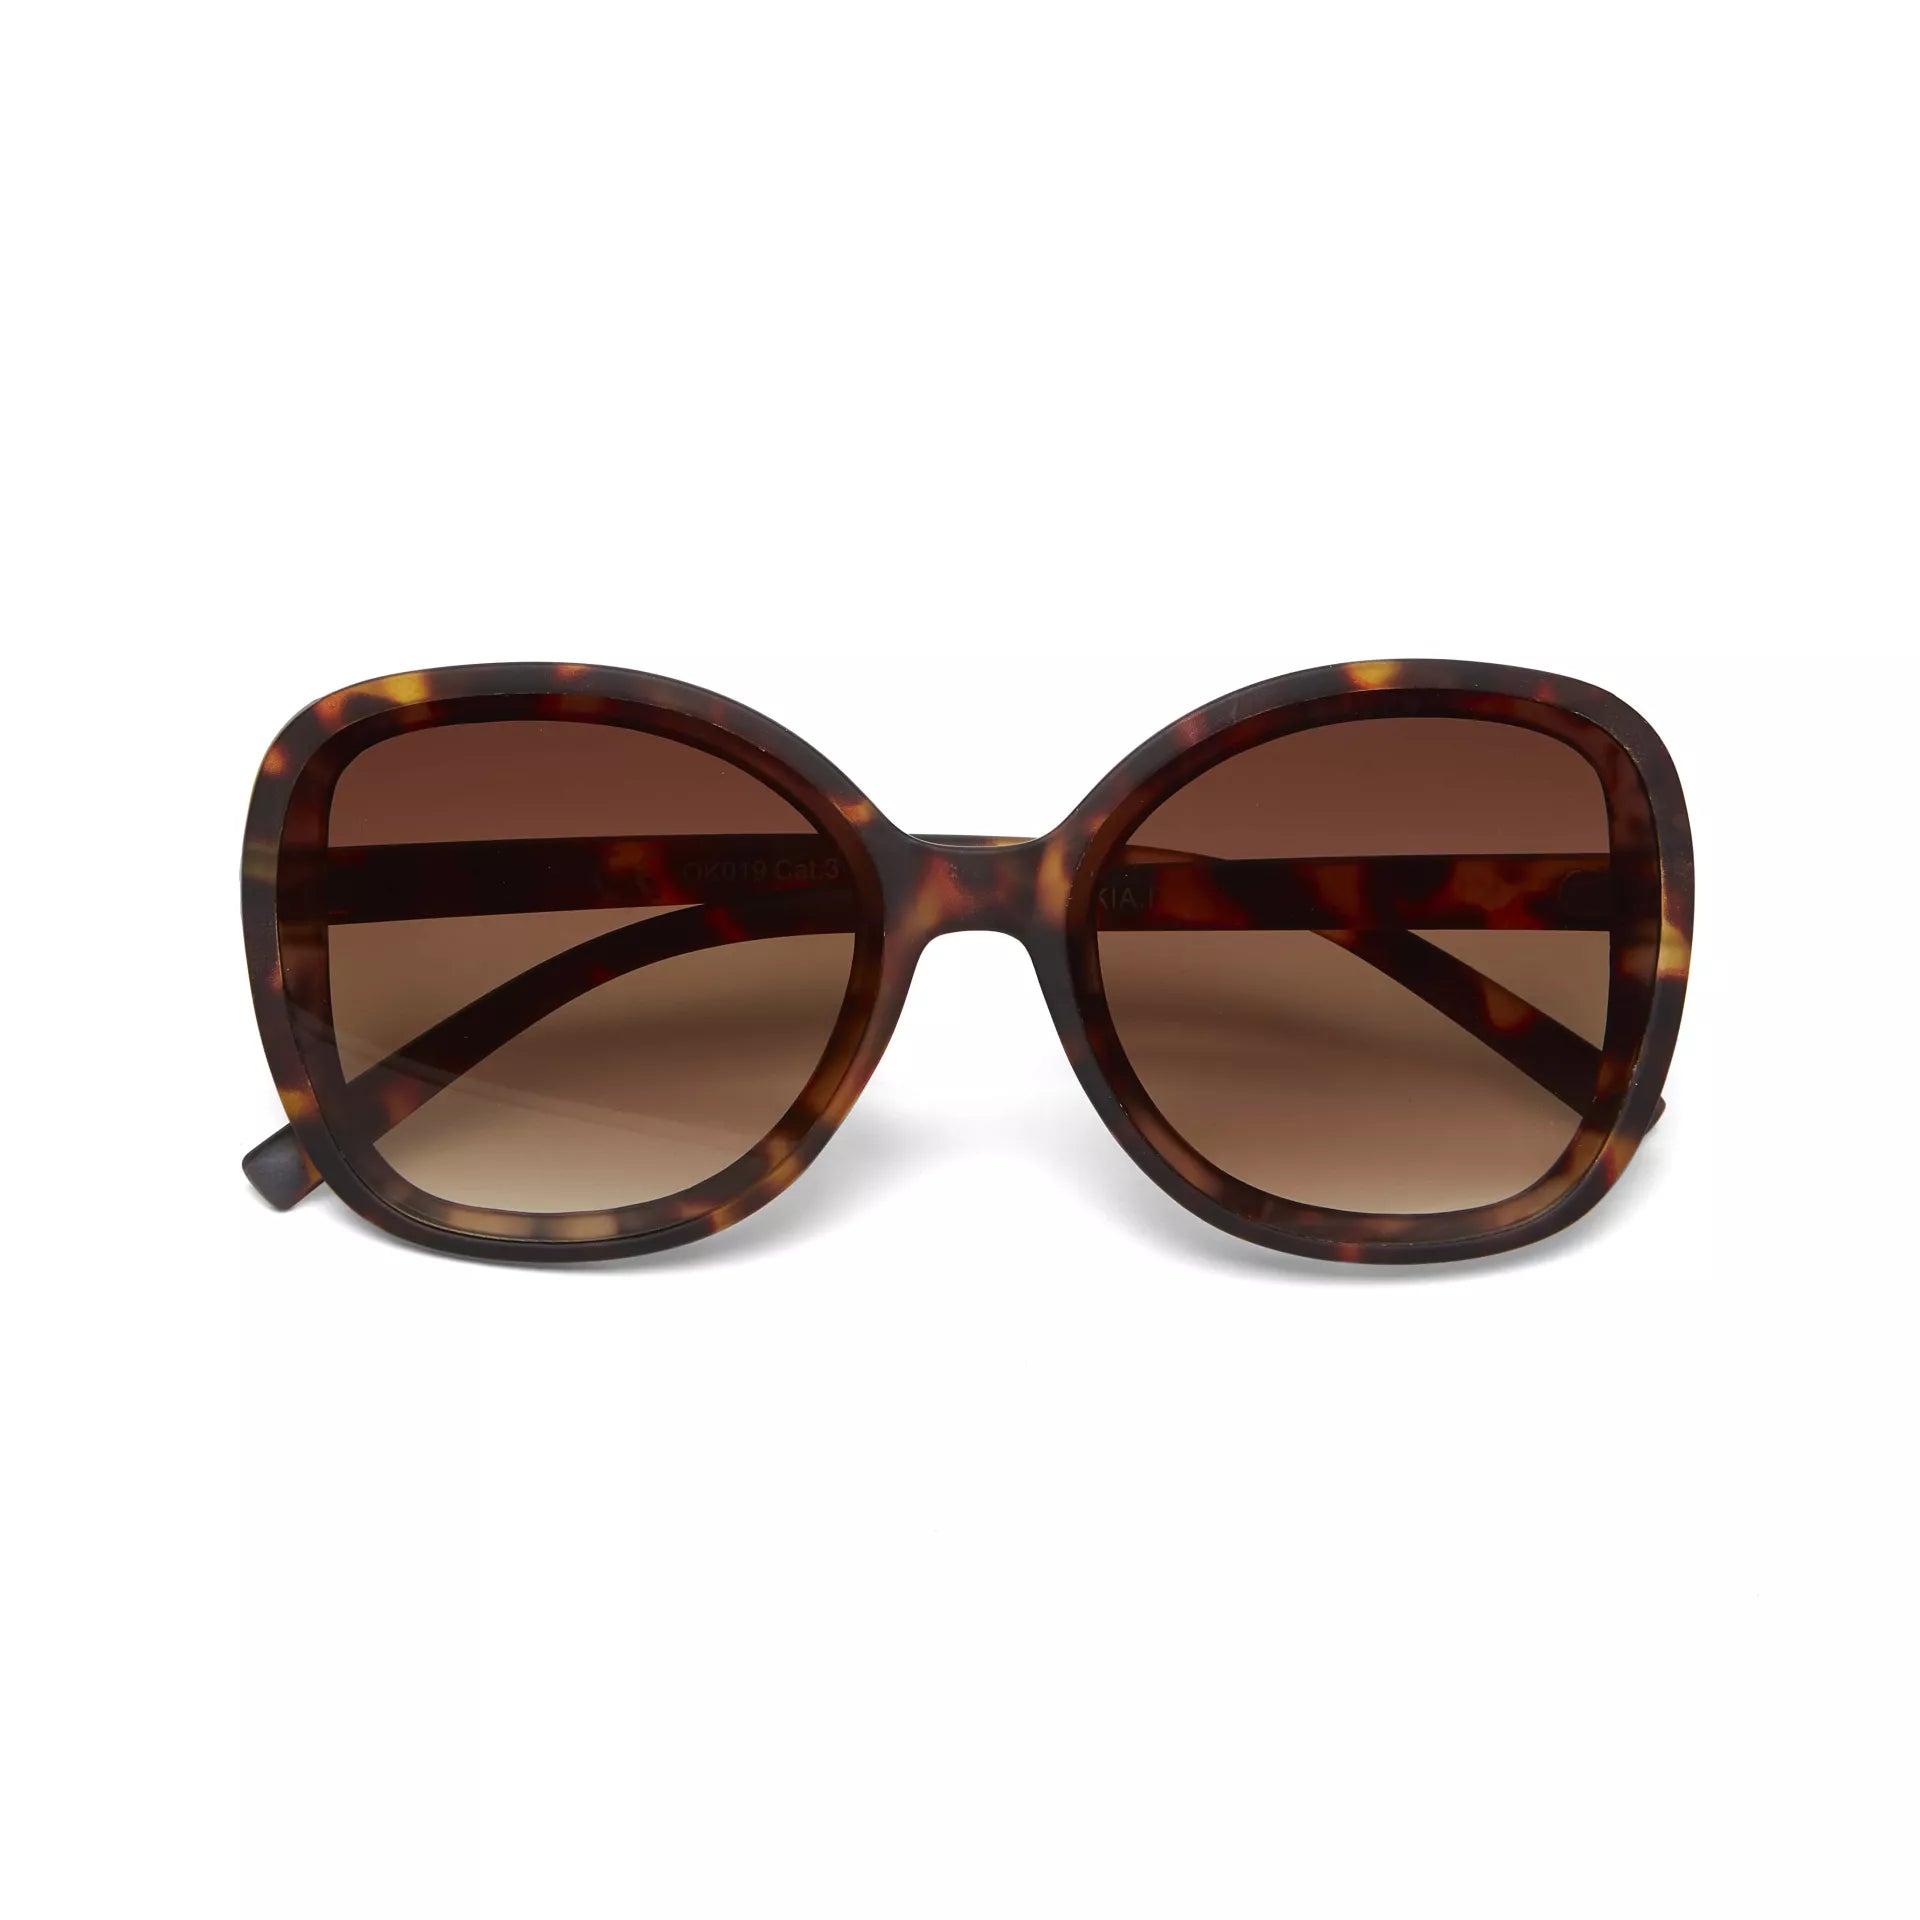 Fabulous Gifts Okkia Sunglasses Butterfly Havana Brown by Weirs of Baggot Street